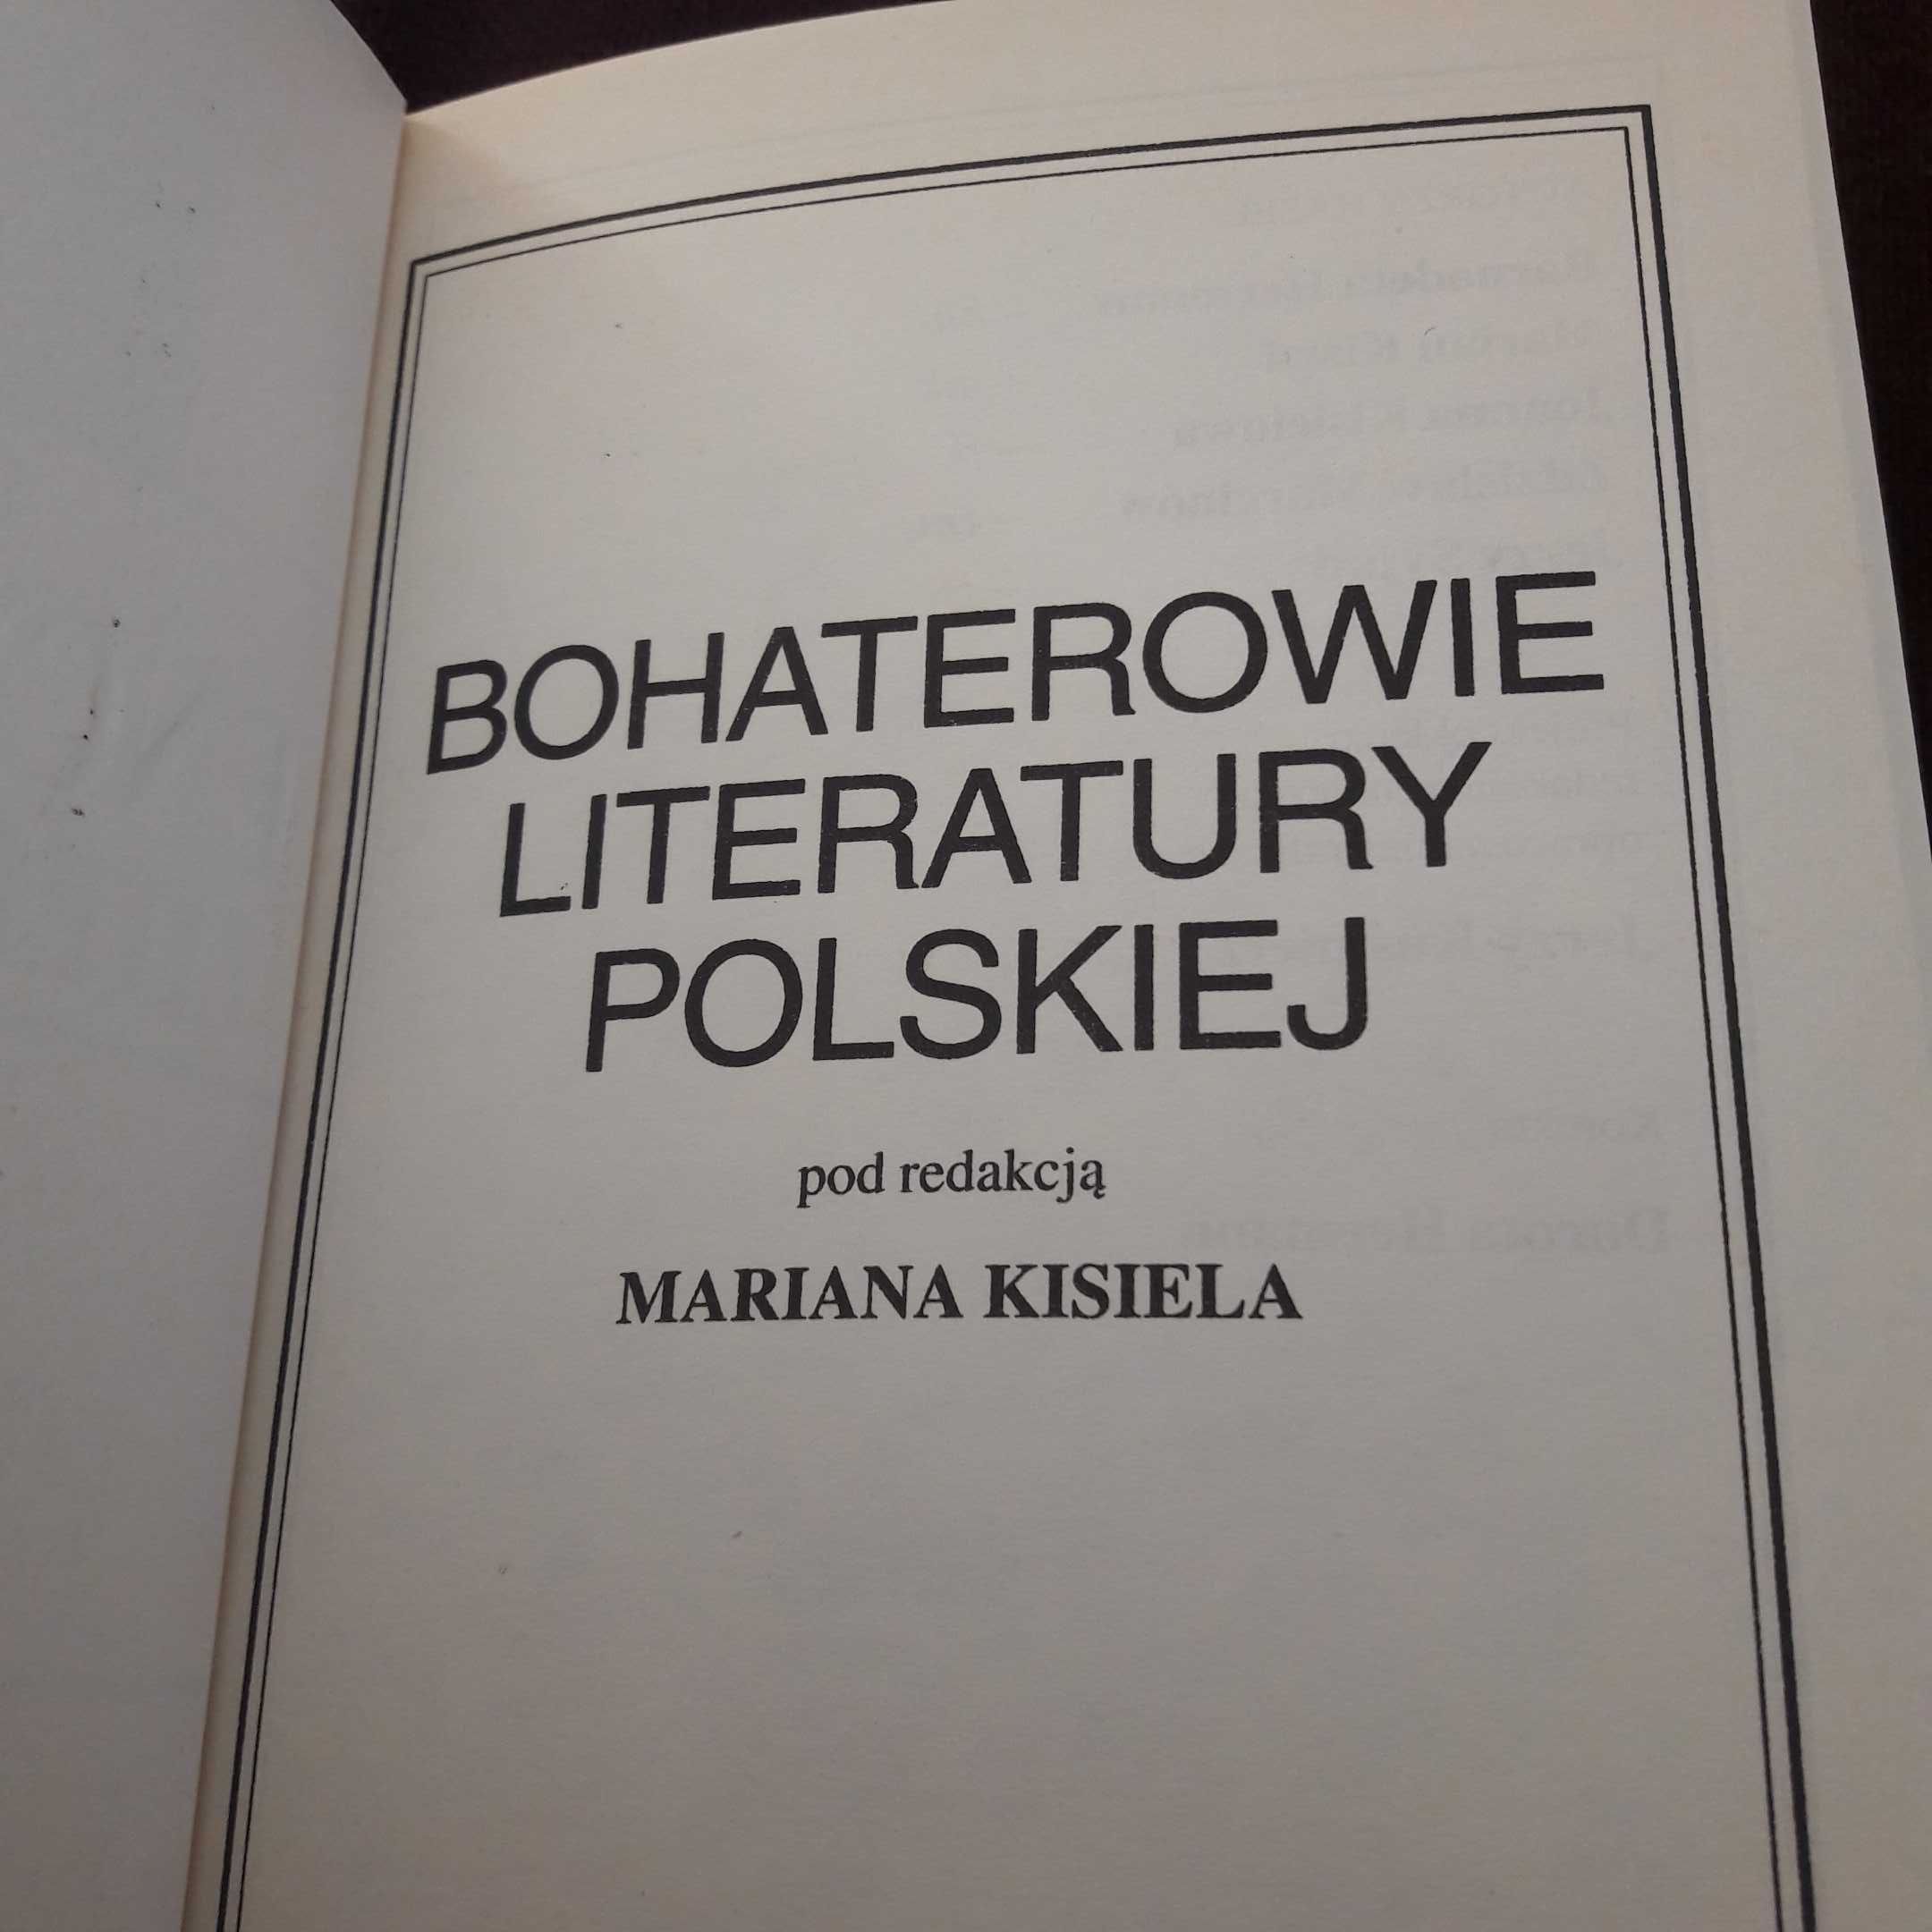 Kieszonkowa encyklopedia literatury i sztuki